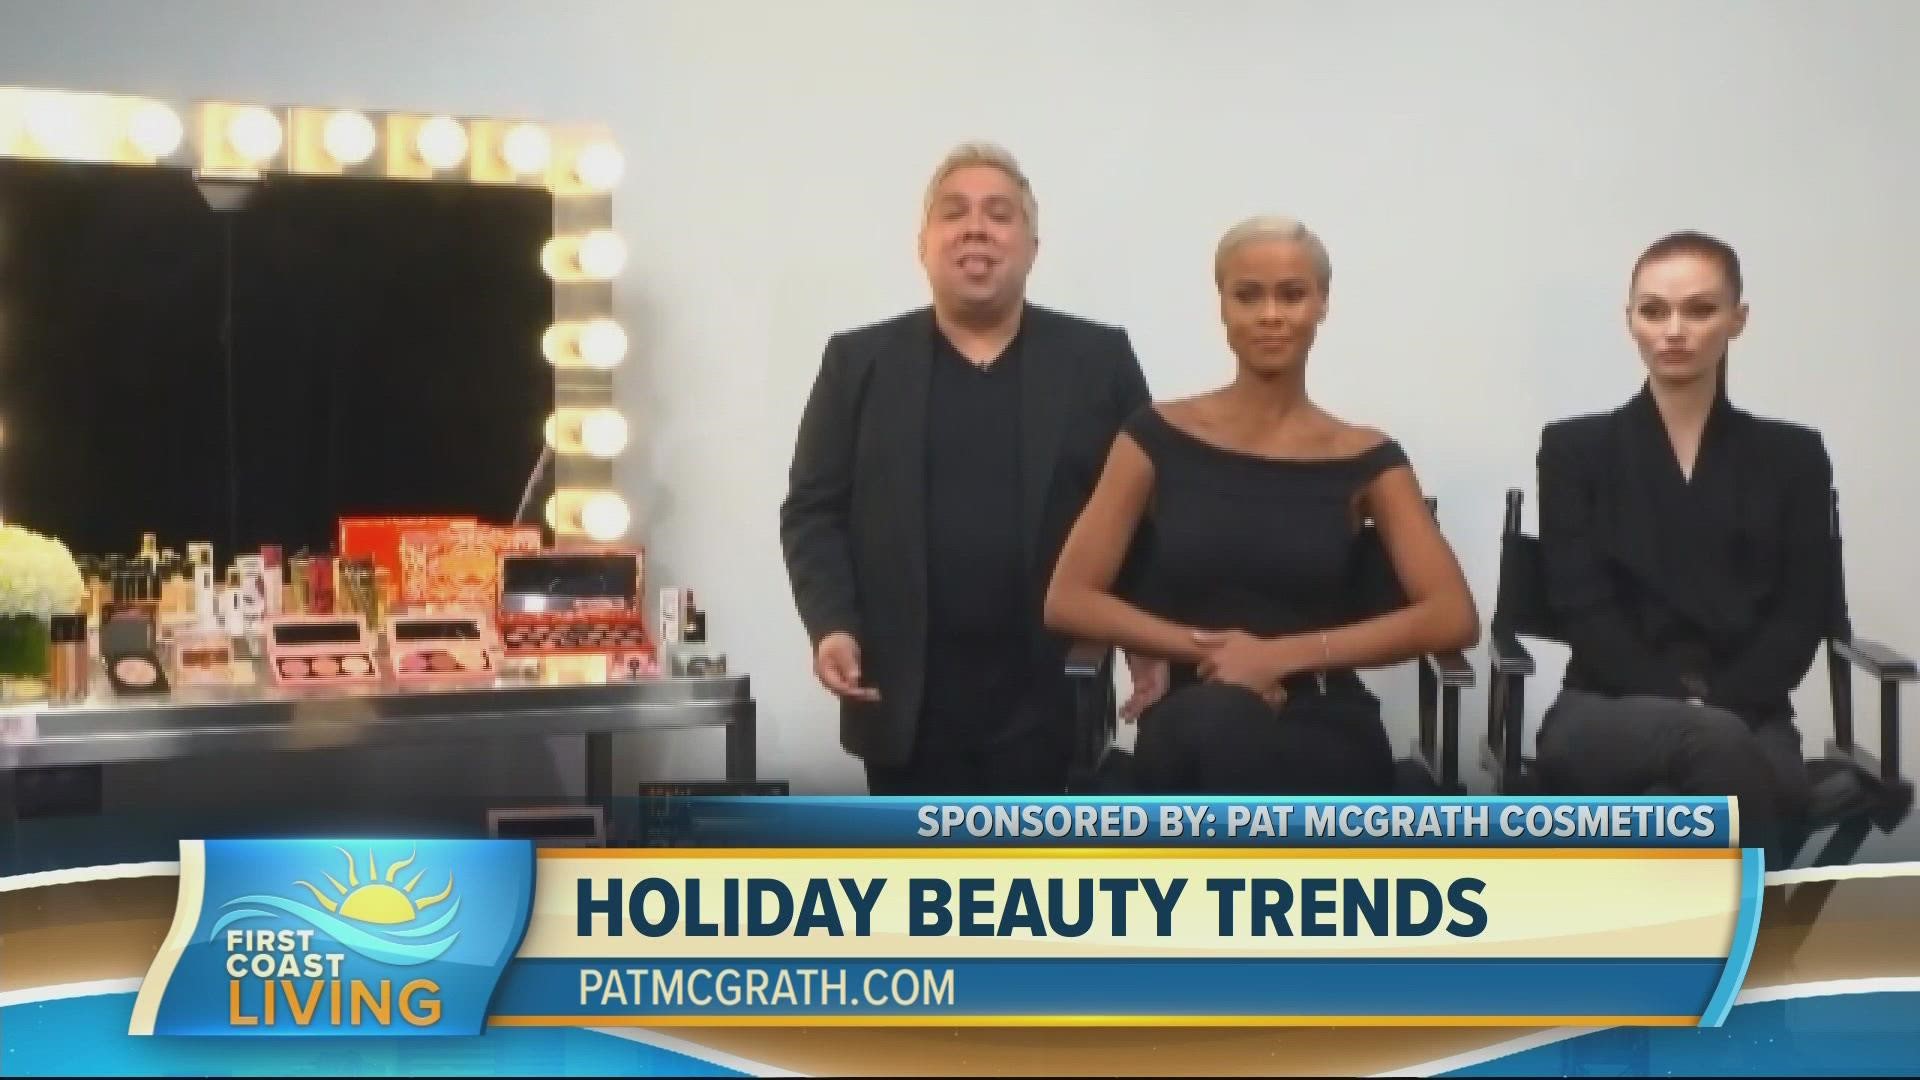 Celebrity makeup artist, Renny Vasquez shares holiday makeup trends using Pat McGrath Cosmetics.